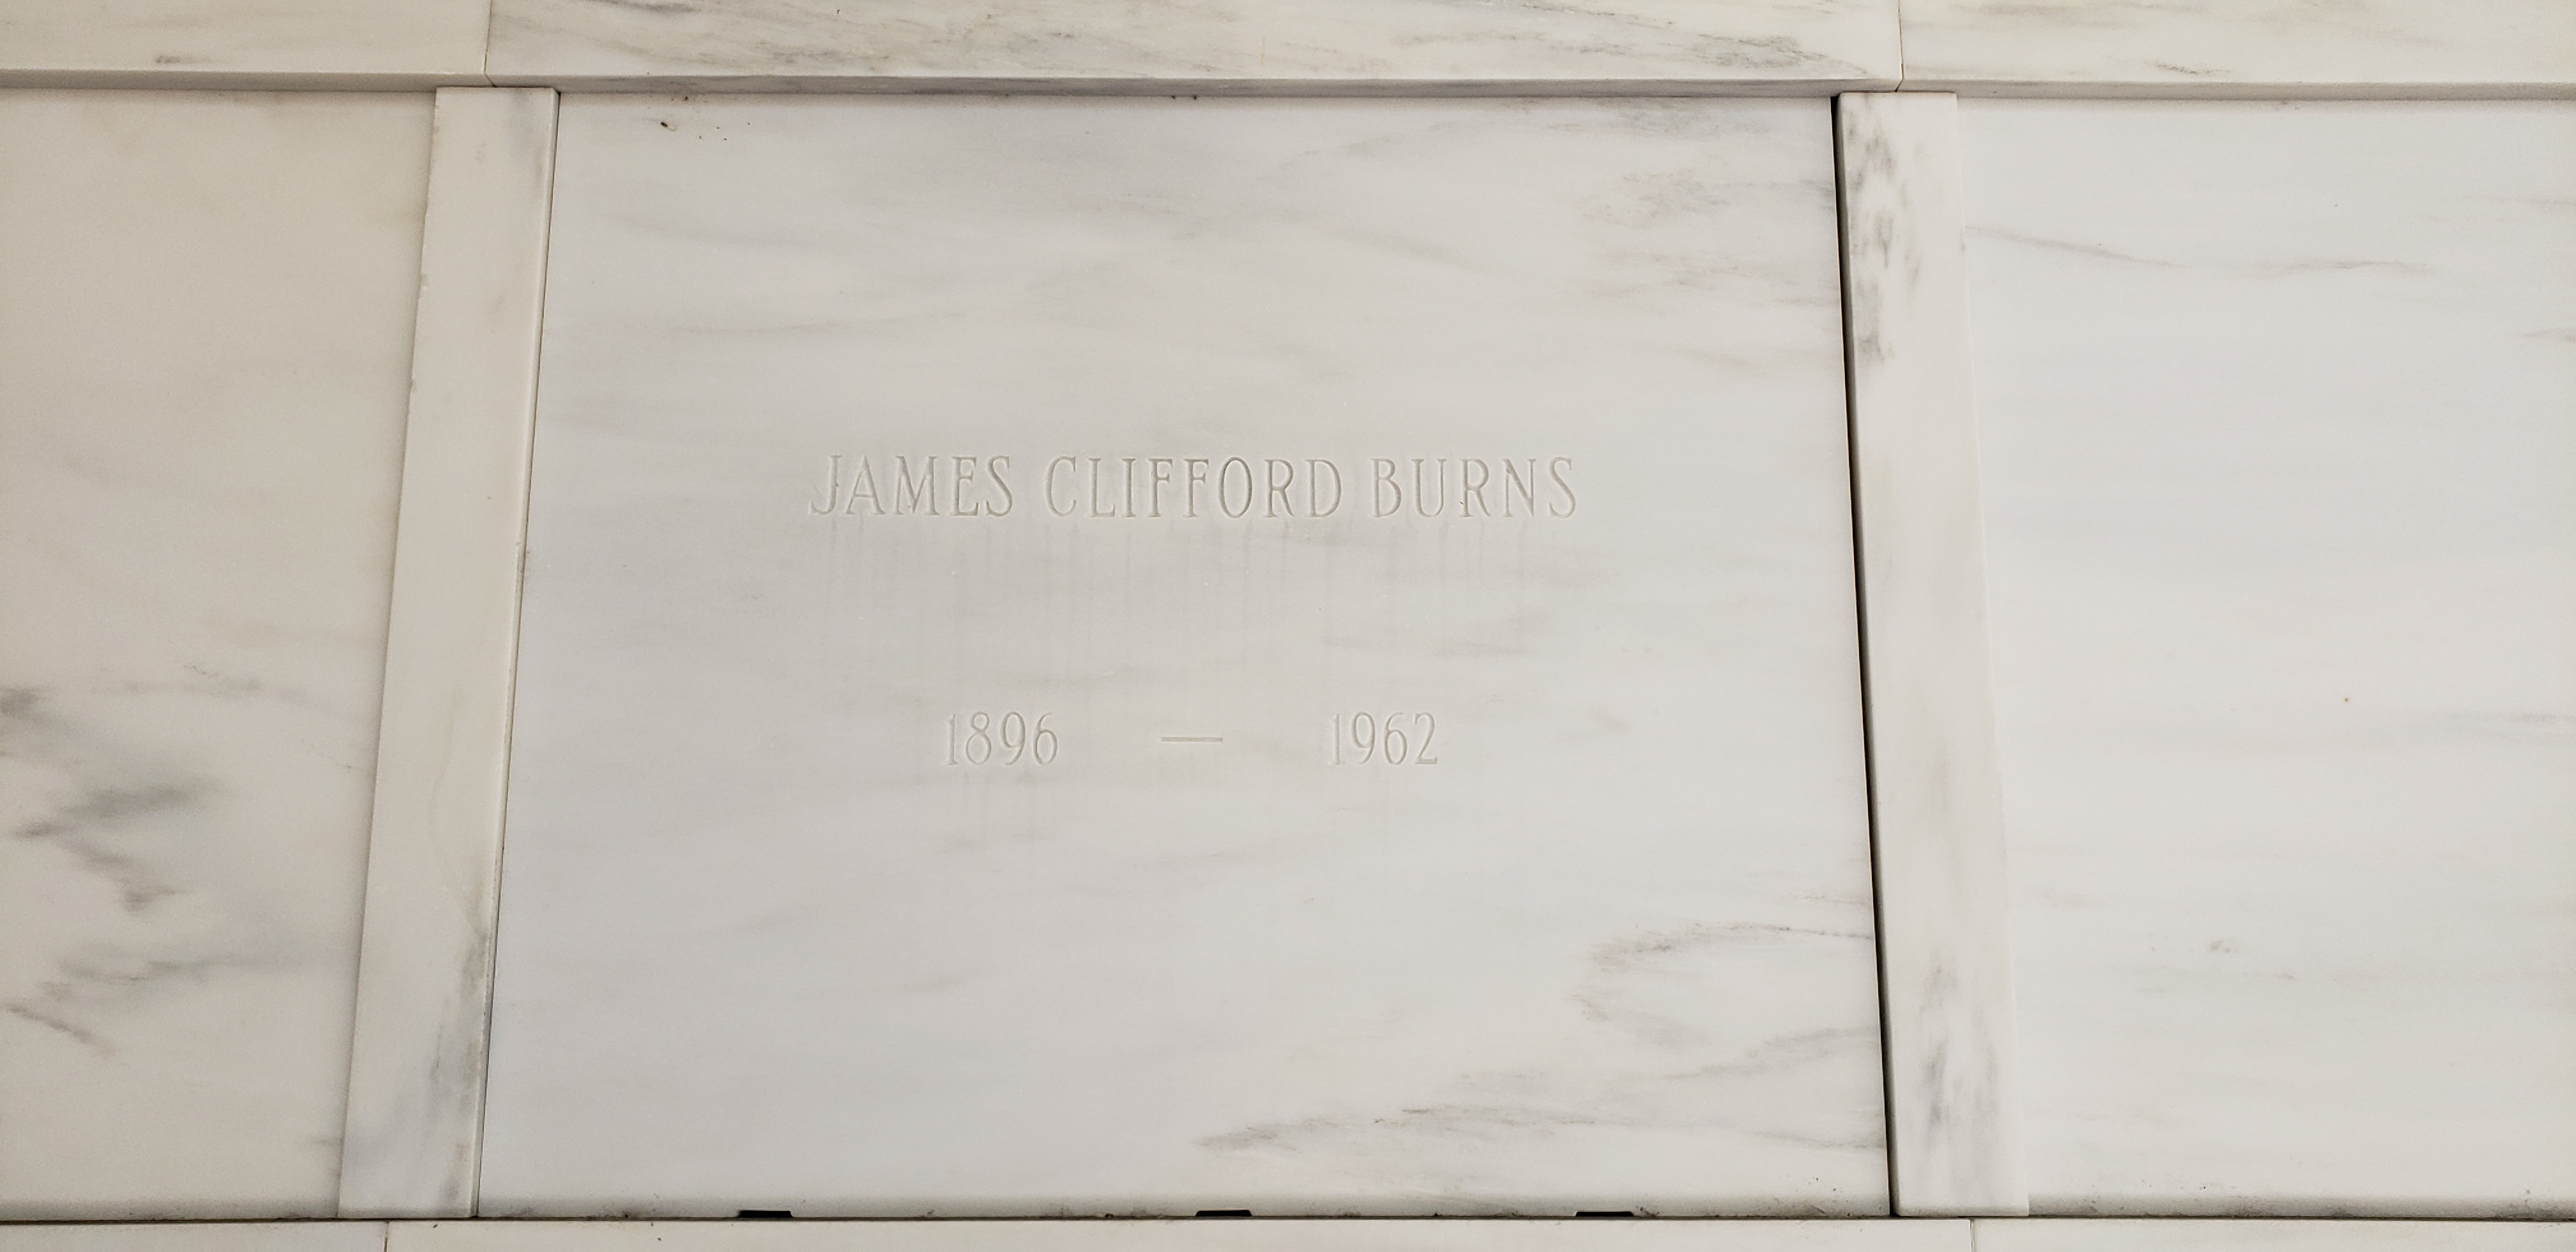 James Clifford Burns